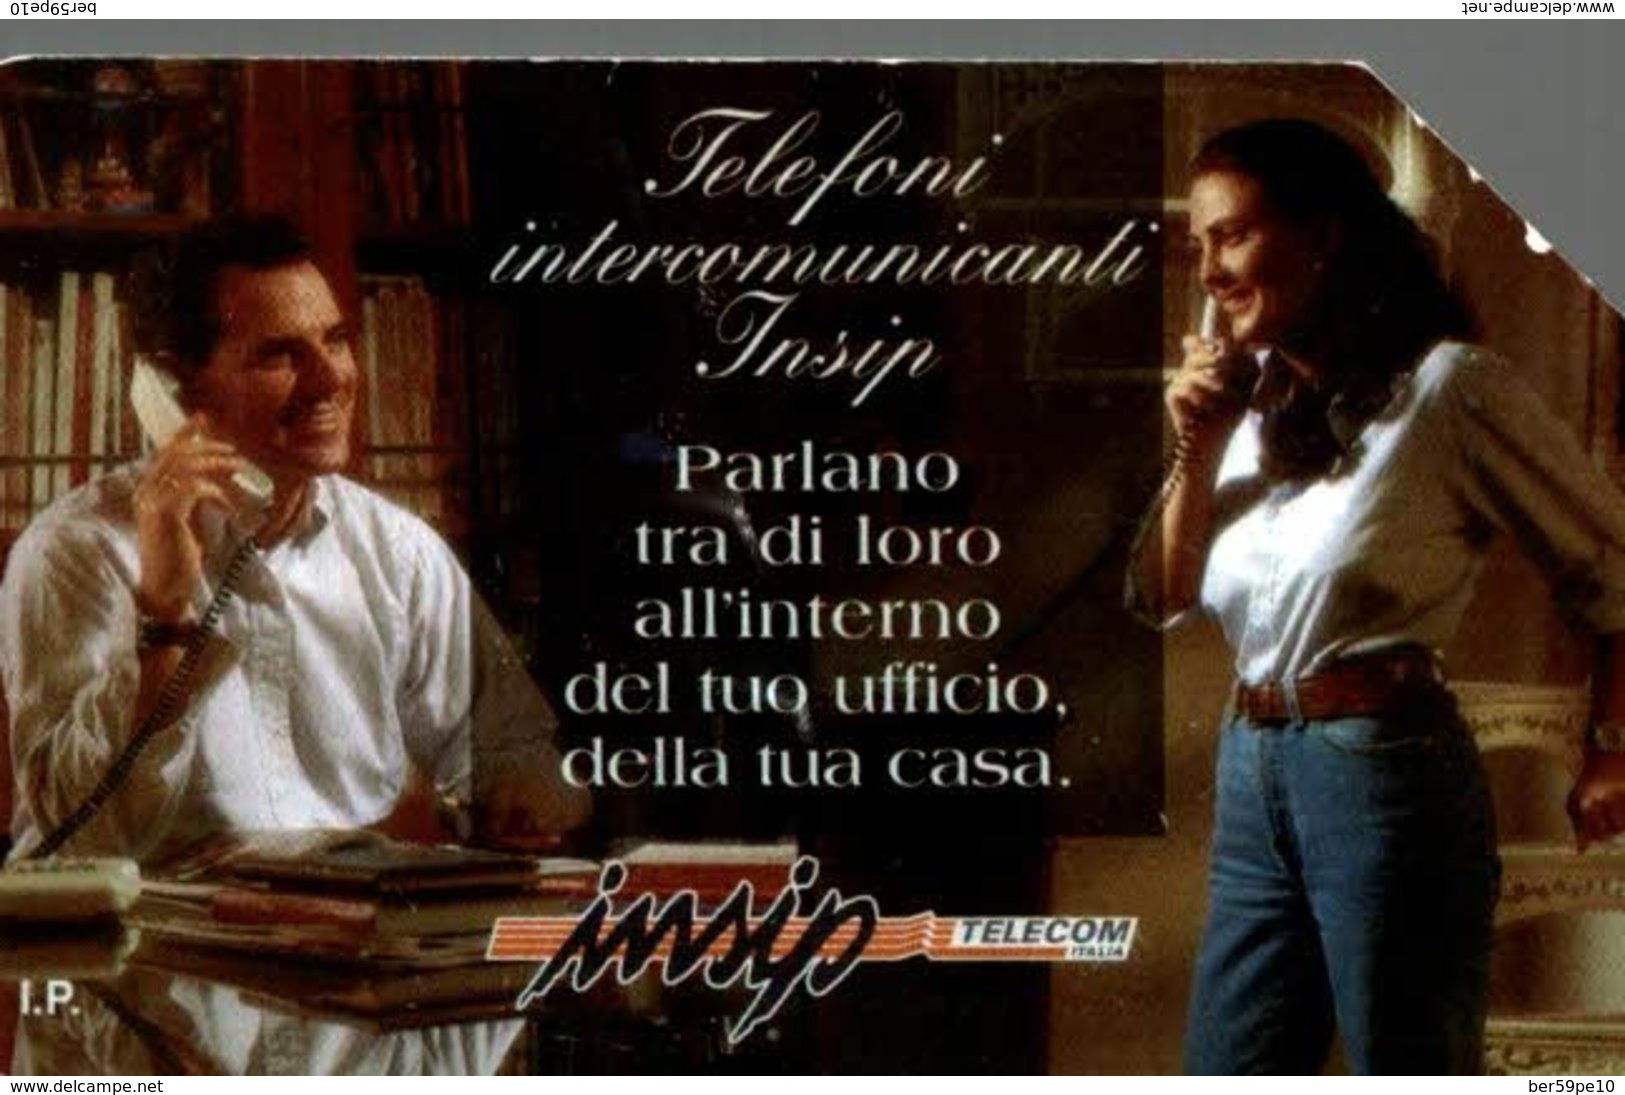 ITALIE CARTA TELEFONICA TELEFONI INTERCOMUNICATI INSIP  LIRE 5.000 - Collections